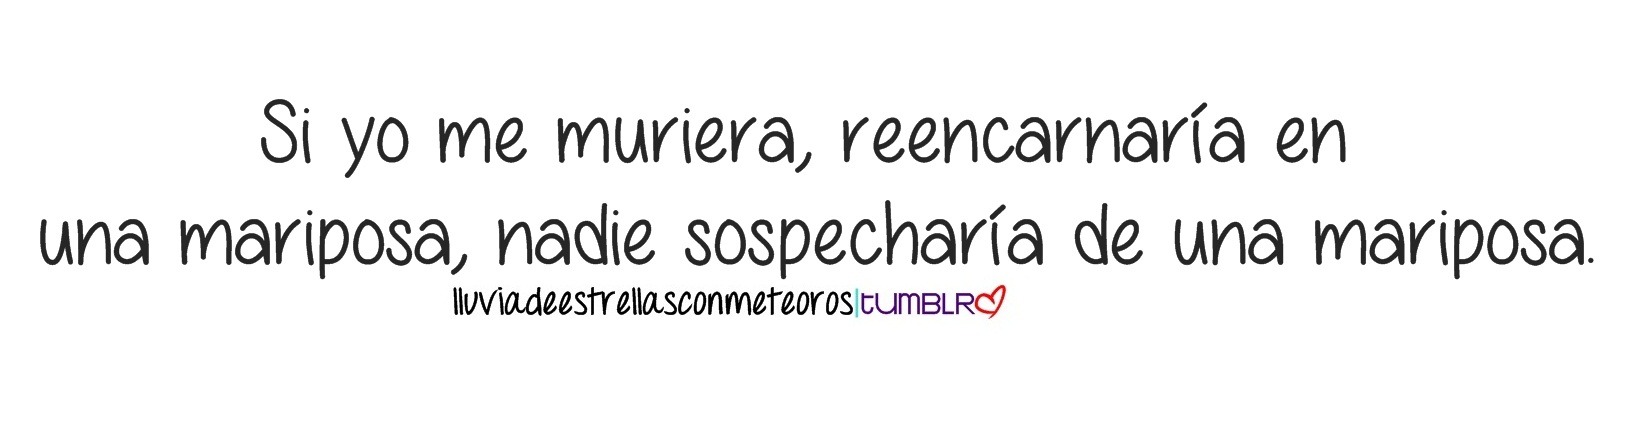 Tumblr Love Pictures In Spanish spanish quotes love